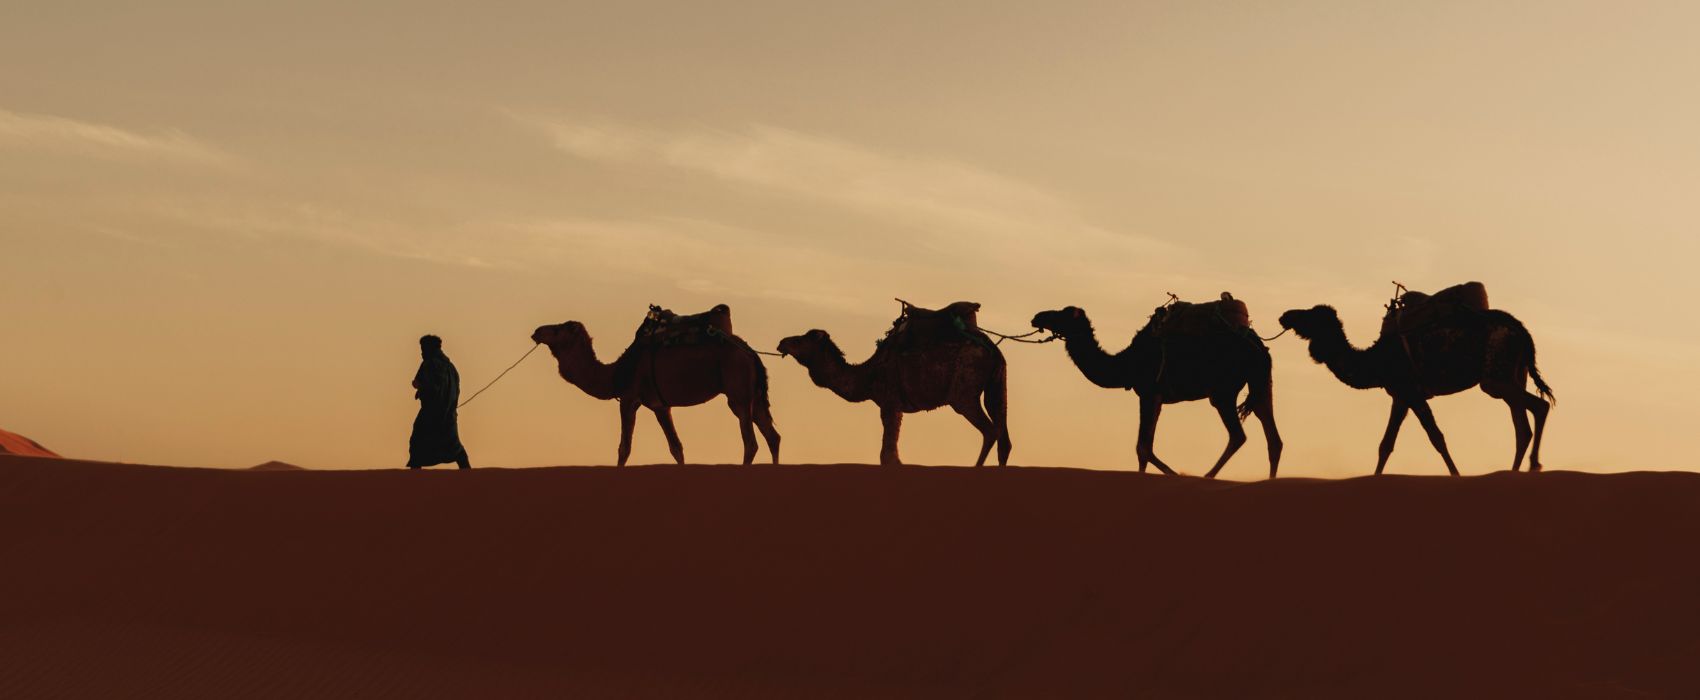 camel ride in dubai